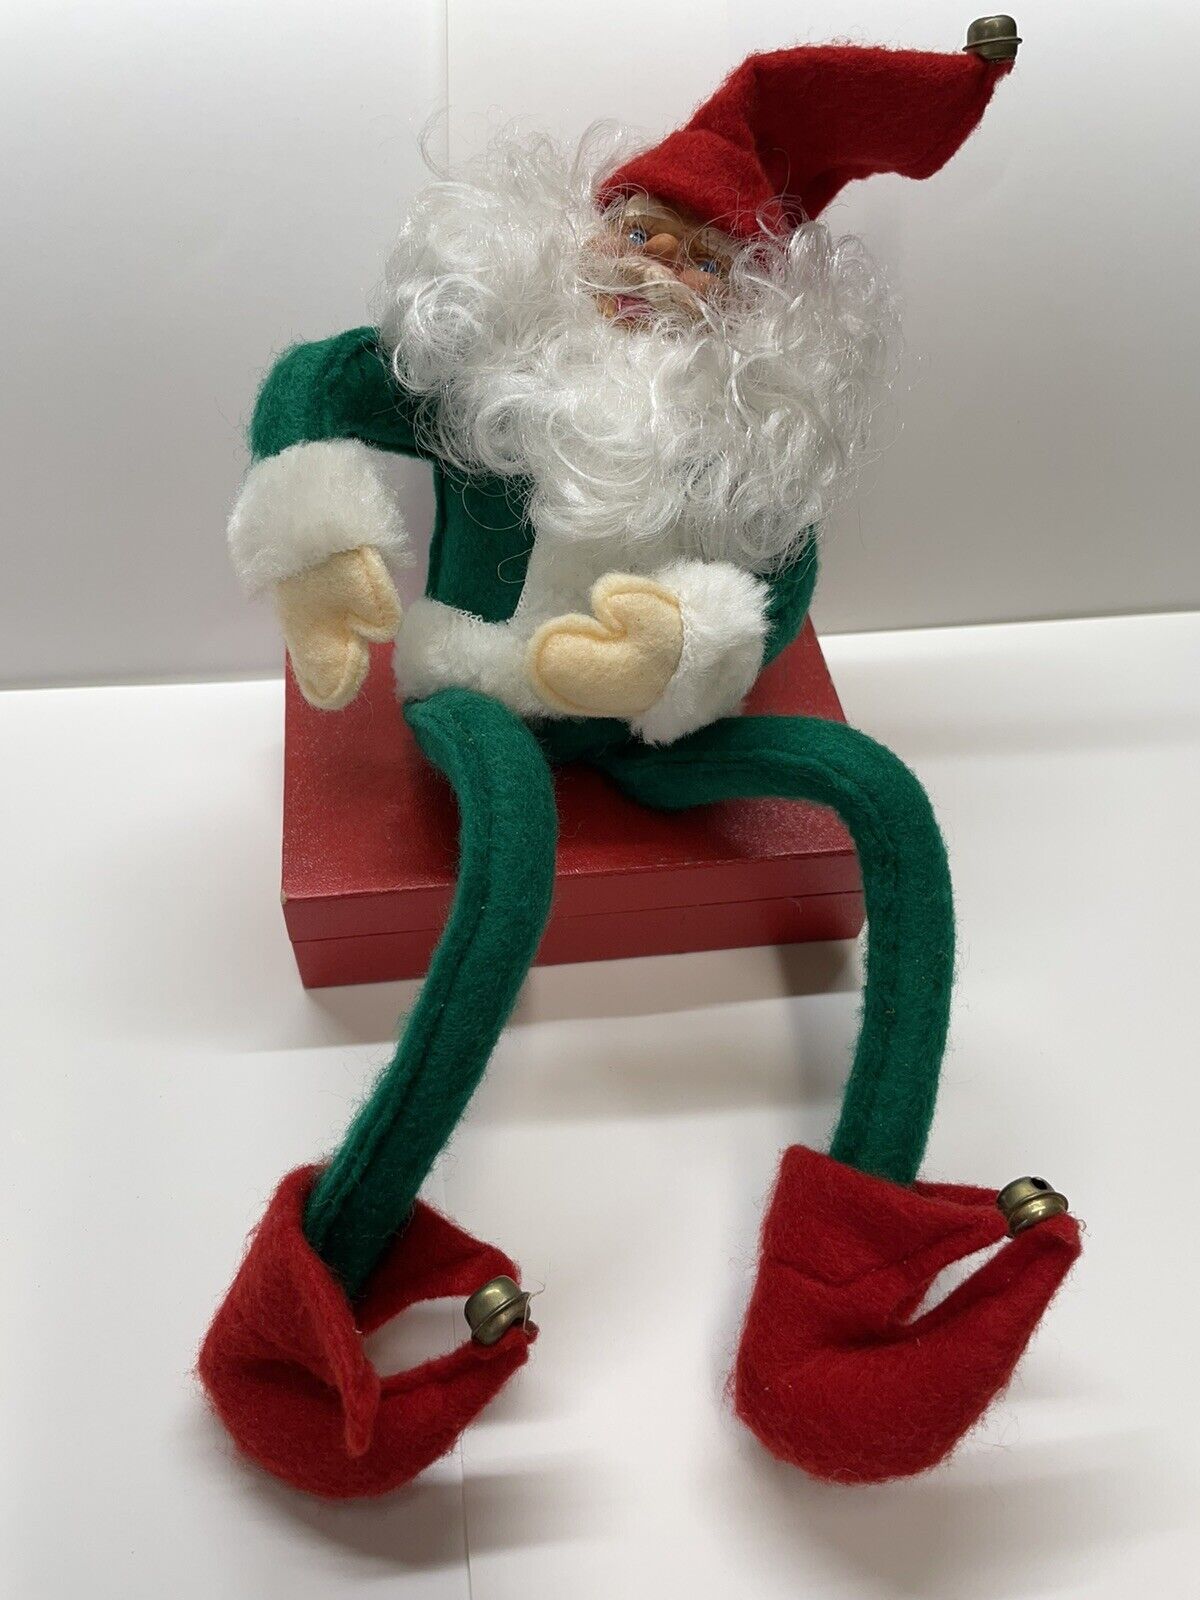 Christmas Knee Hugger Santa Claus Elf Figure Decoration Vtg. Face Yellowing #2